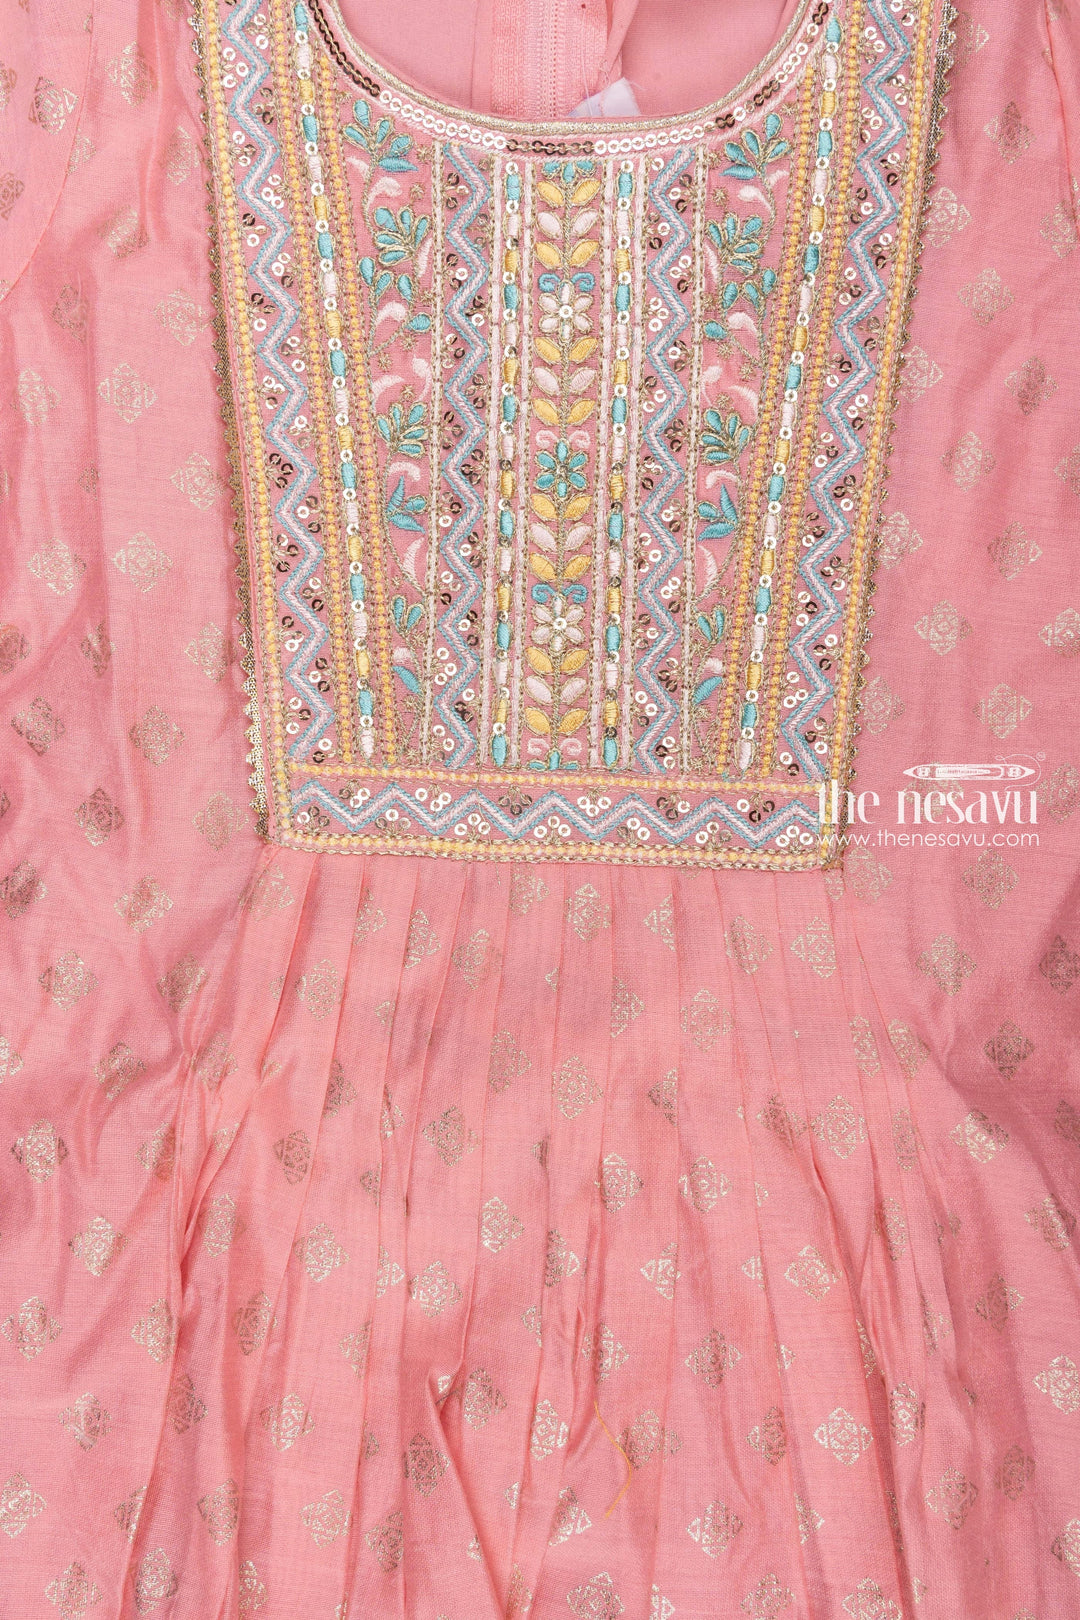 The Nesavu Girls Sharara / Plazo set Chic Sequin Foil Printed Pink Kurti & Yellow Sharara: Traditional Beauty for Girls Nesavu Embroidered Kurti With Sharara Pant Set | Girls Festive Wear Collections | the Nesavu